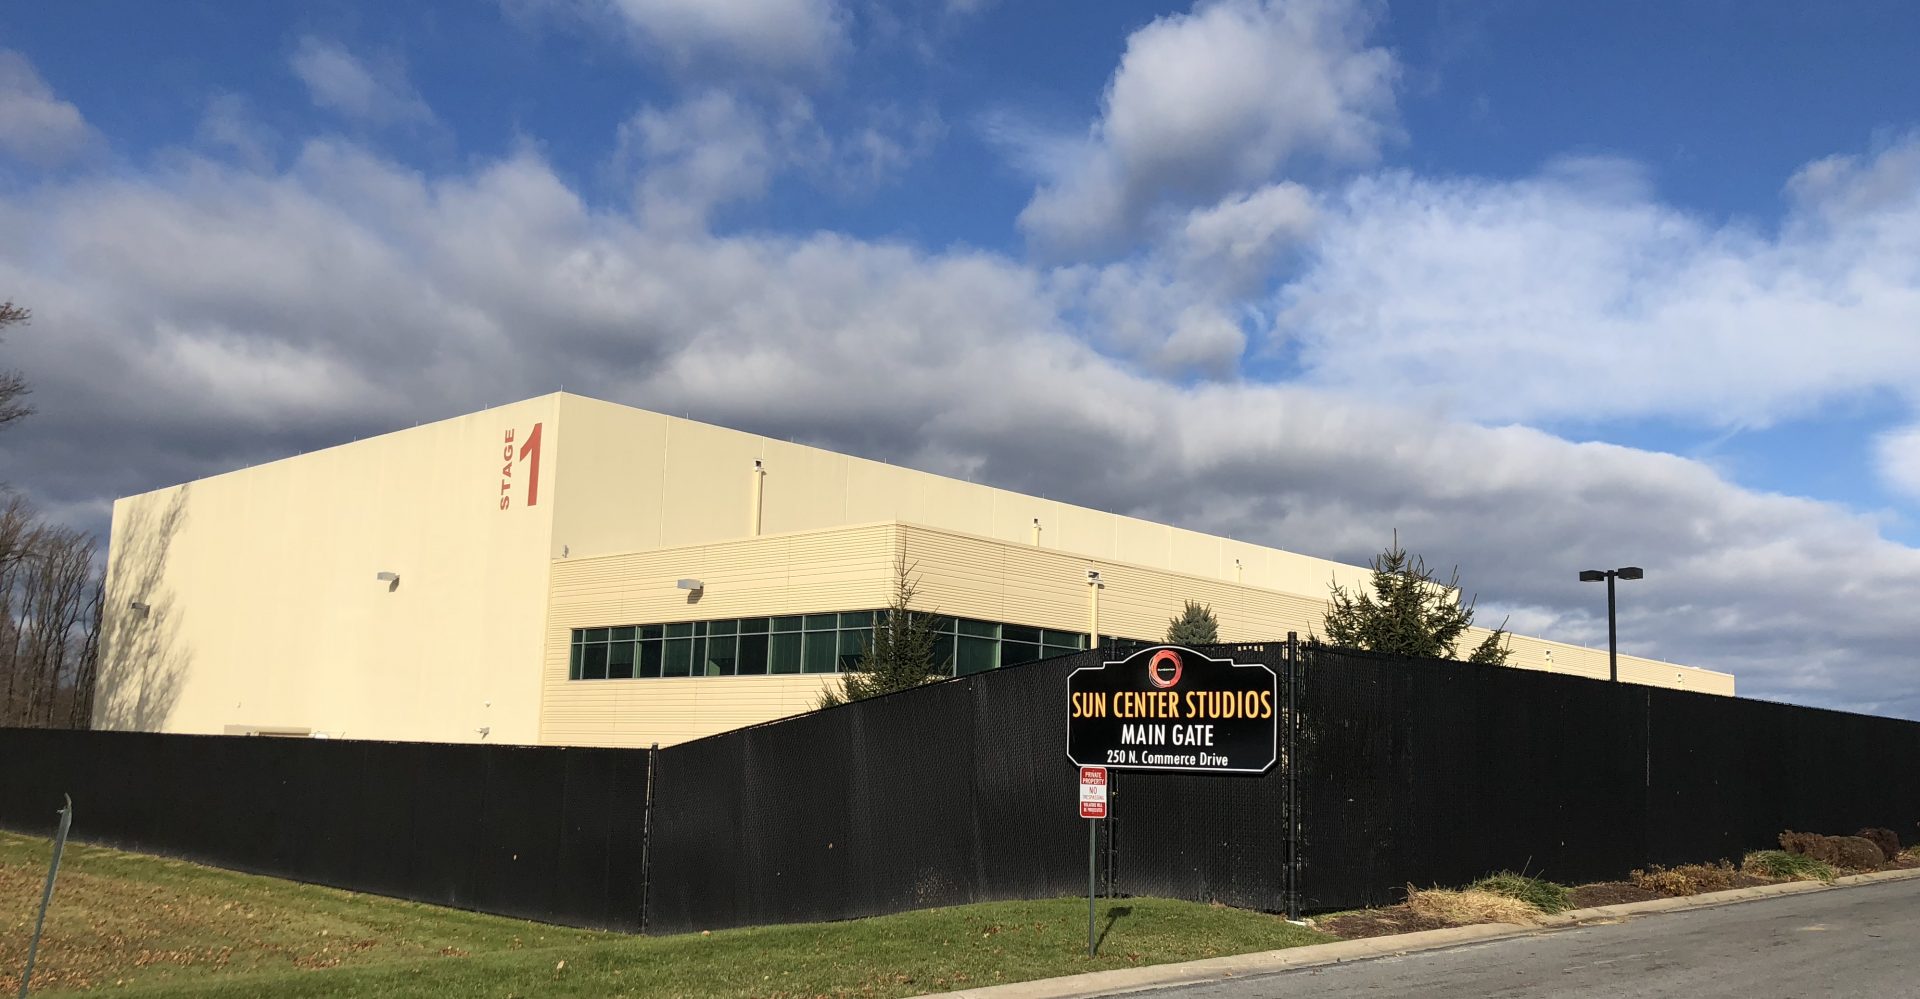 Sun Center Studios in Delaware County is seen in this Nov. 28, 2018 photo.